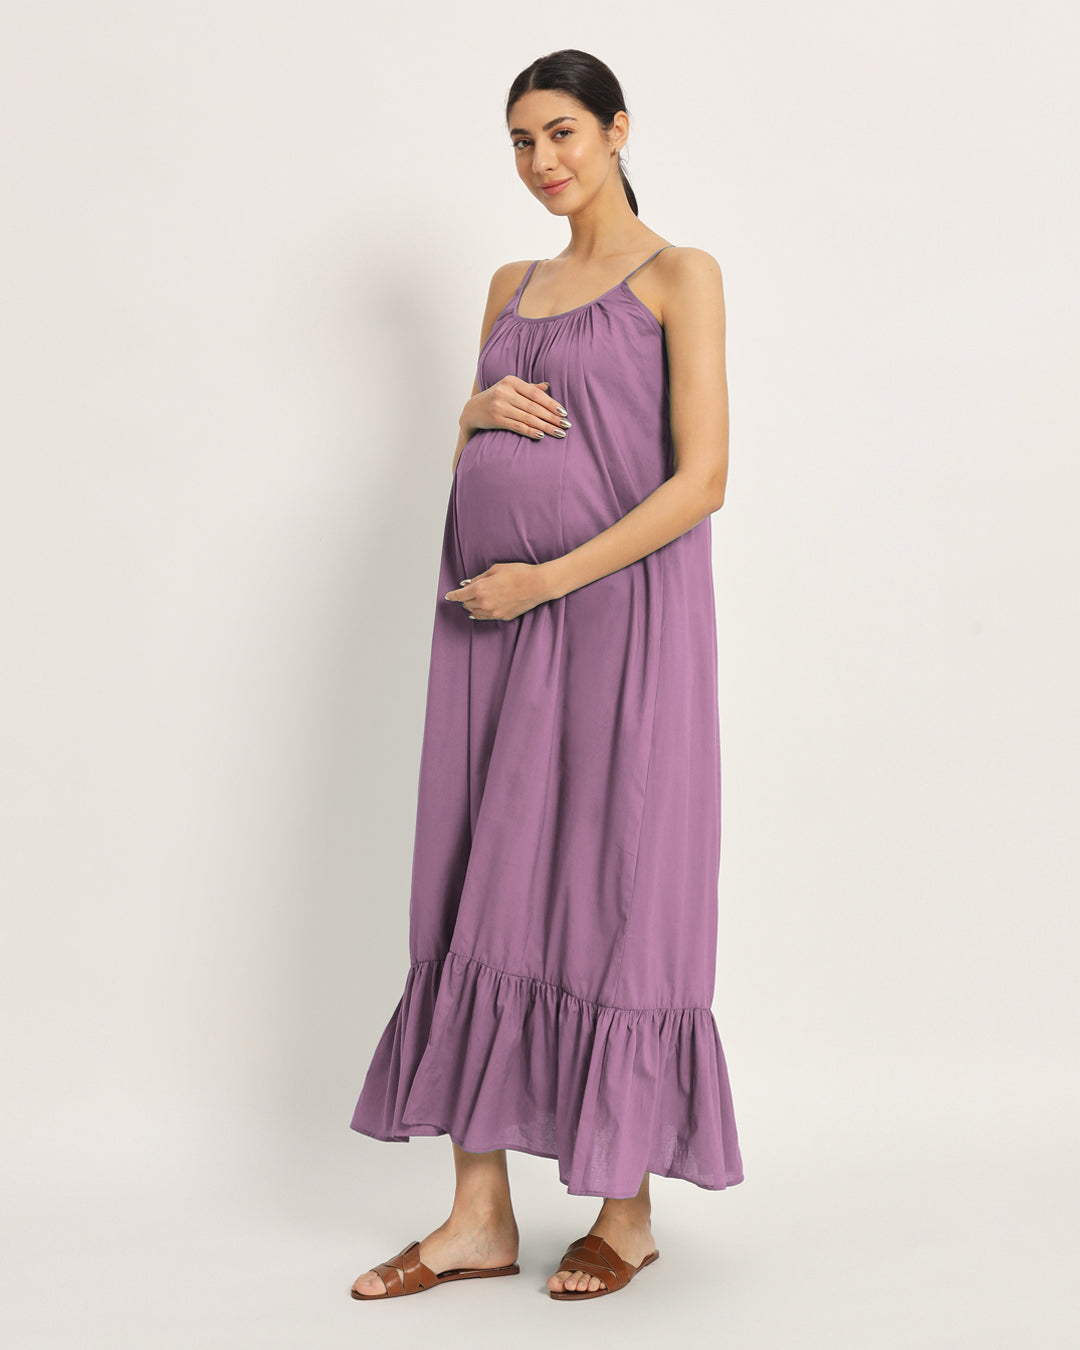 Iris Pink Belly Laugh Maternity & Nursing Dress